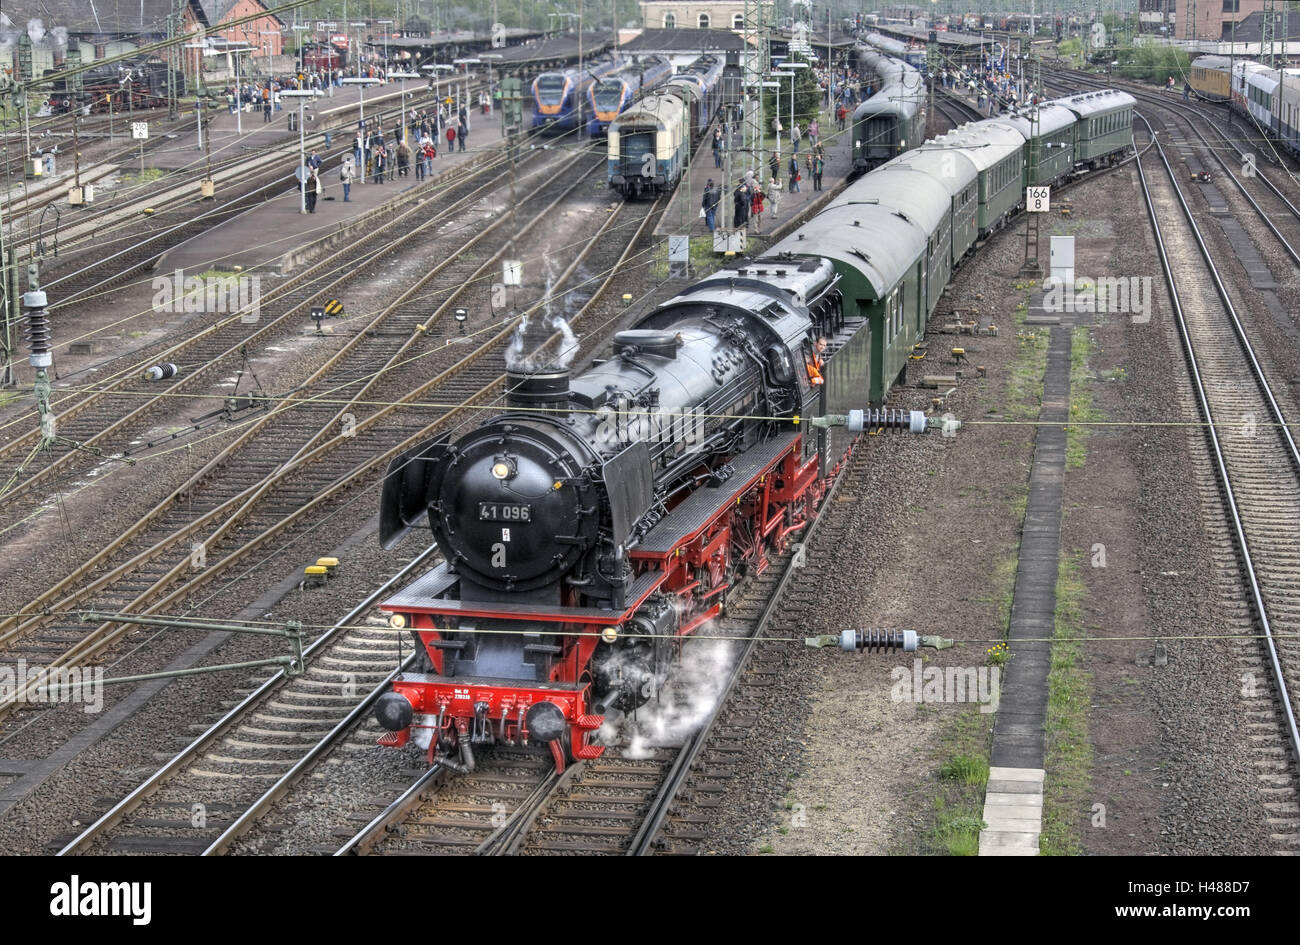 Railway station, passenger train, steam locomotive, Stock Photo